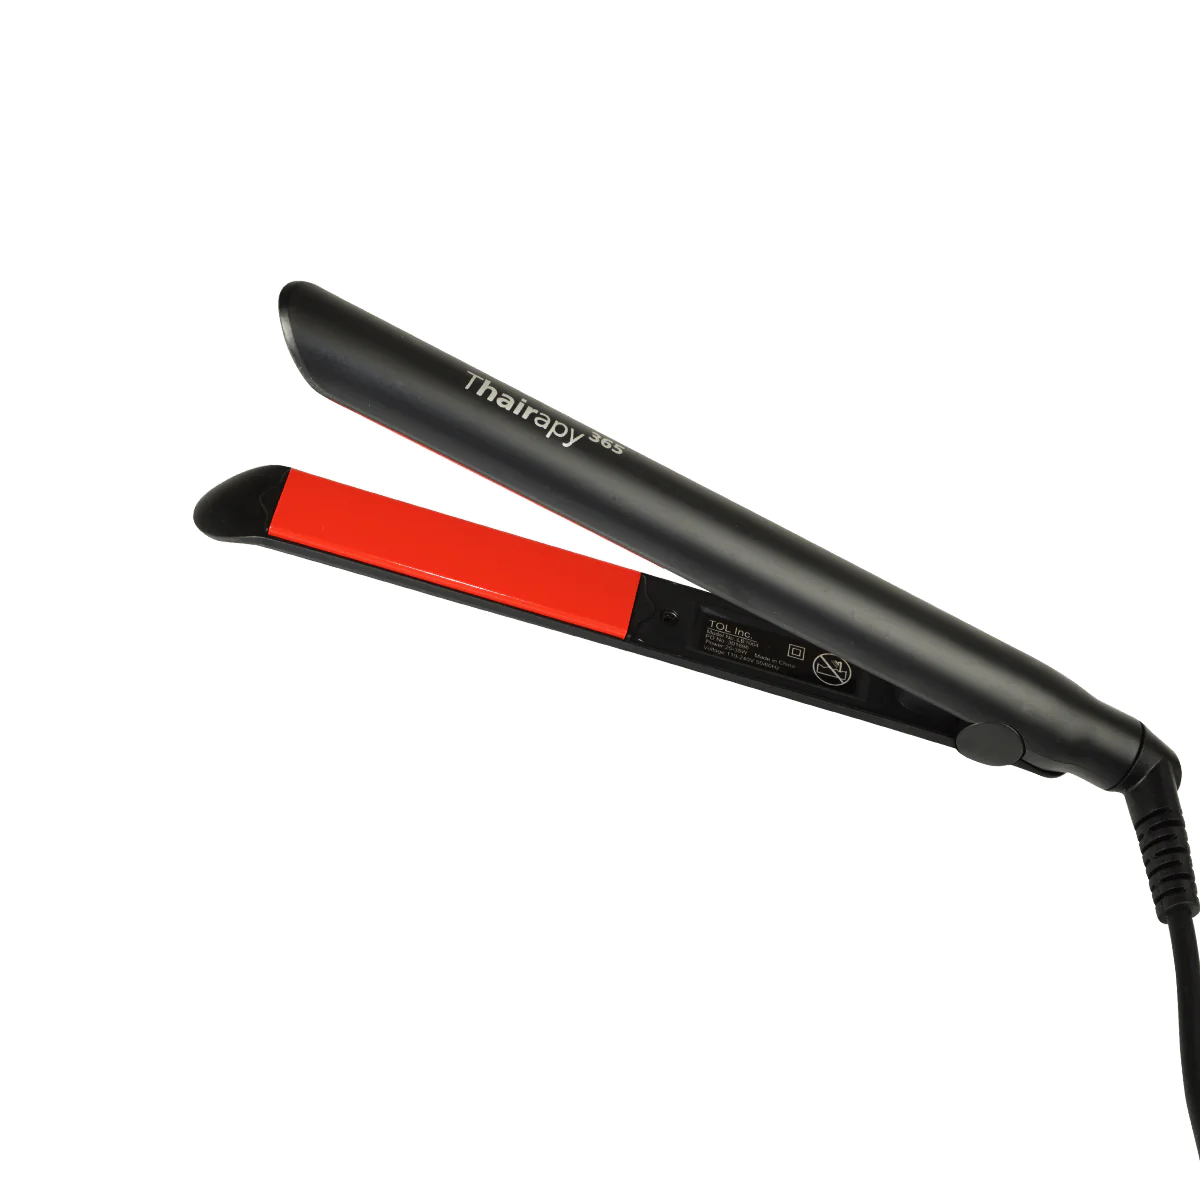 Tourmaline Flat Iron Heat Styling Tool Hair Care Hair Styling Salon Quality